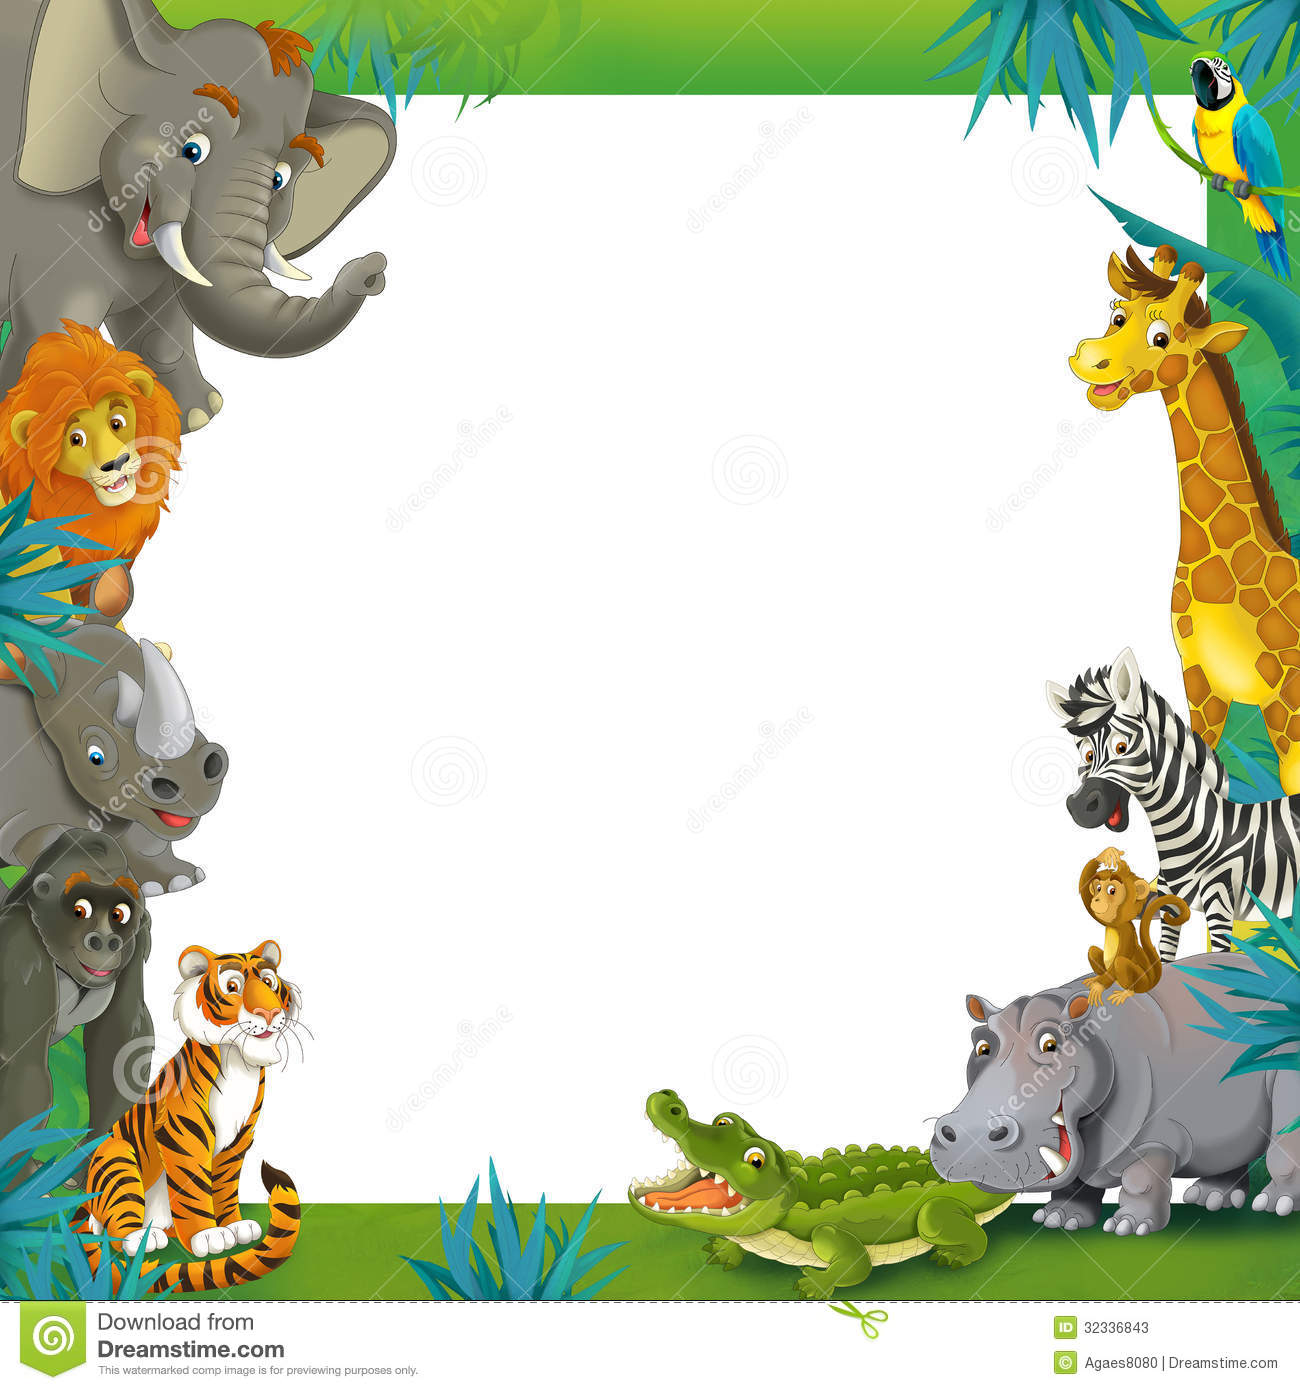 printable-safari-background